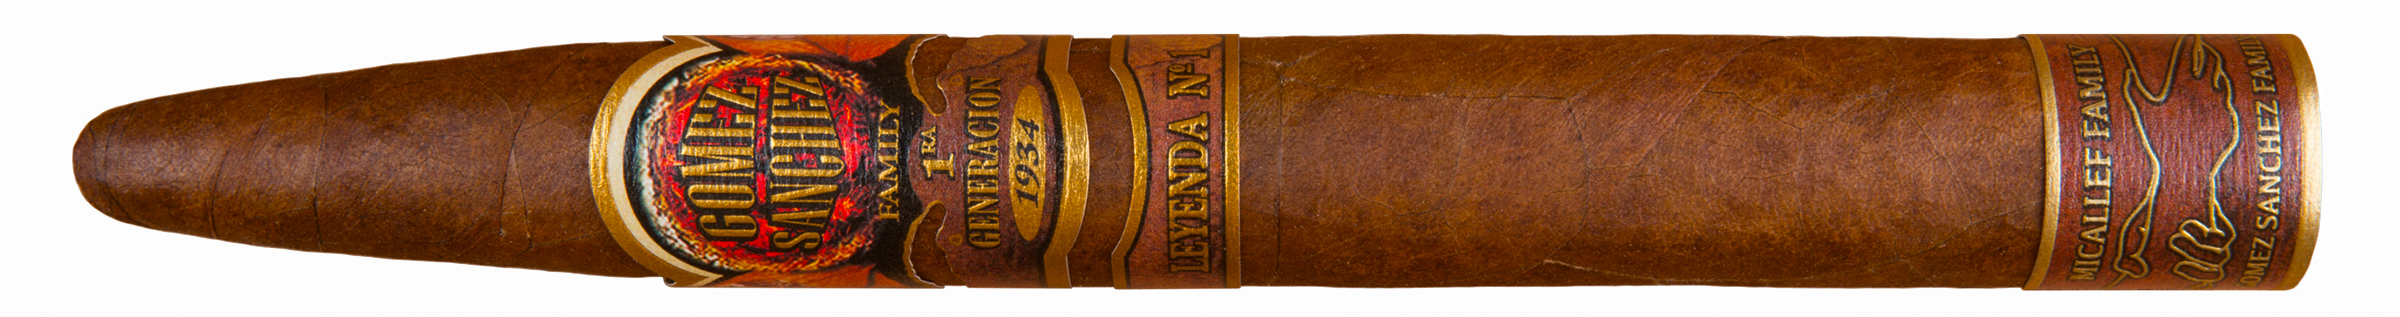 A cigar with Micallef Gomez Sanchez Leyenda label